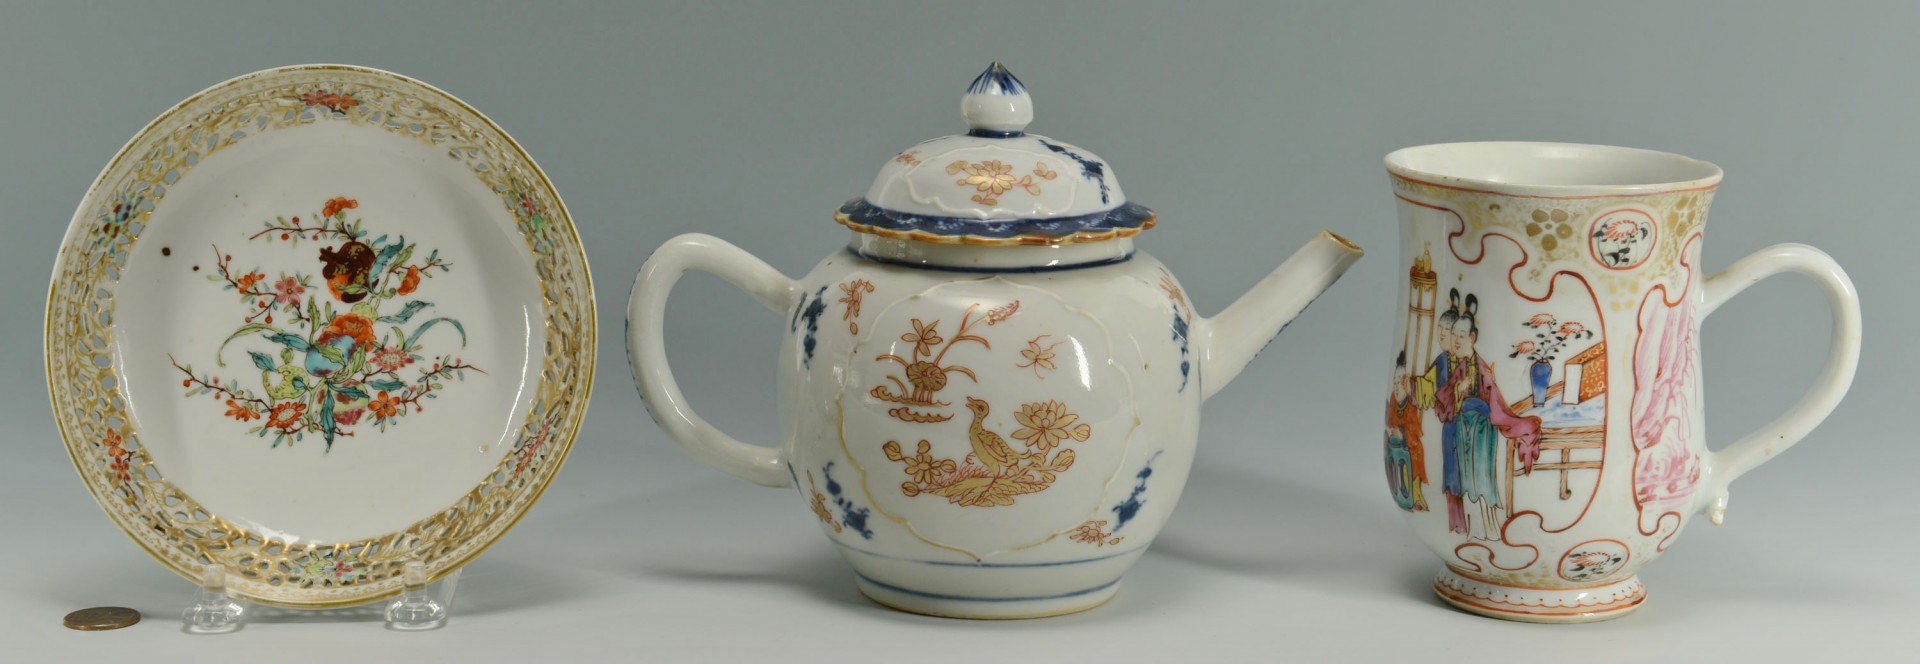 Lot 221: 3 18th c. Chinese Export Items: teapot, mug & dish